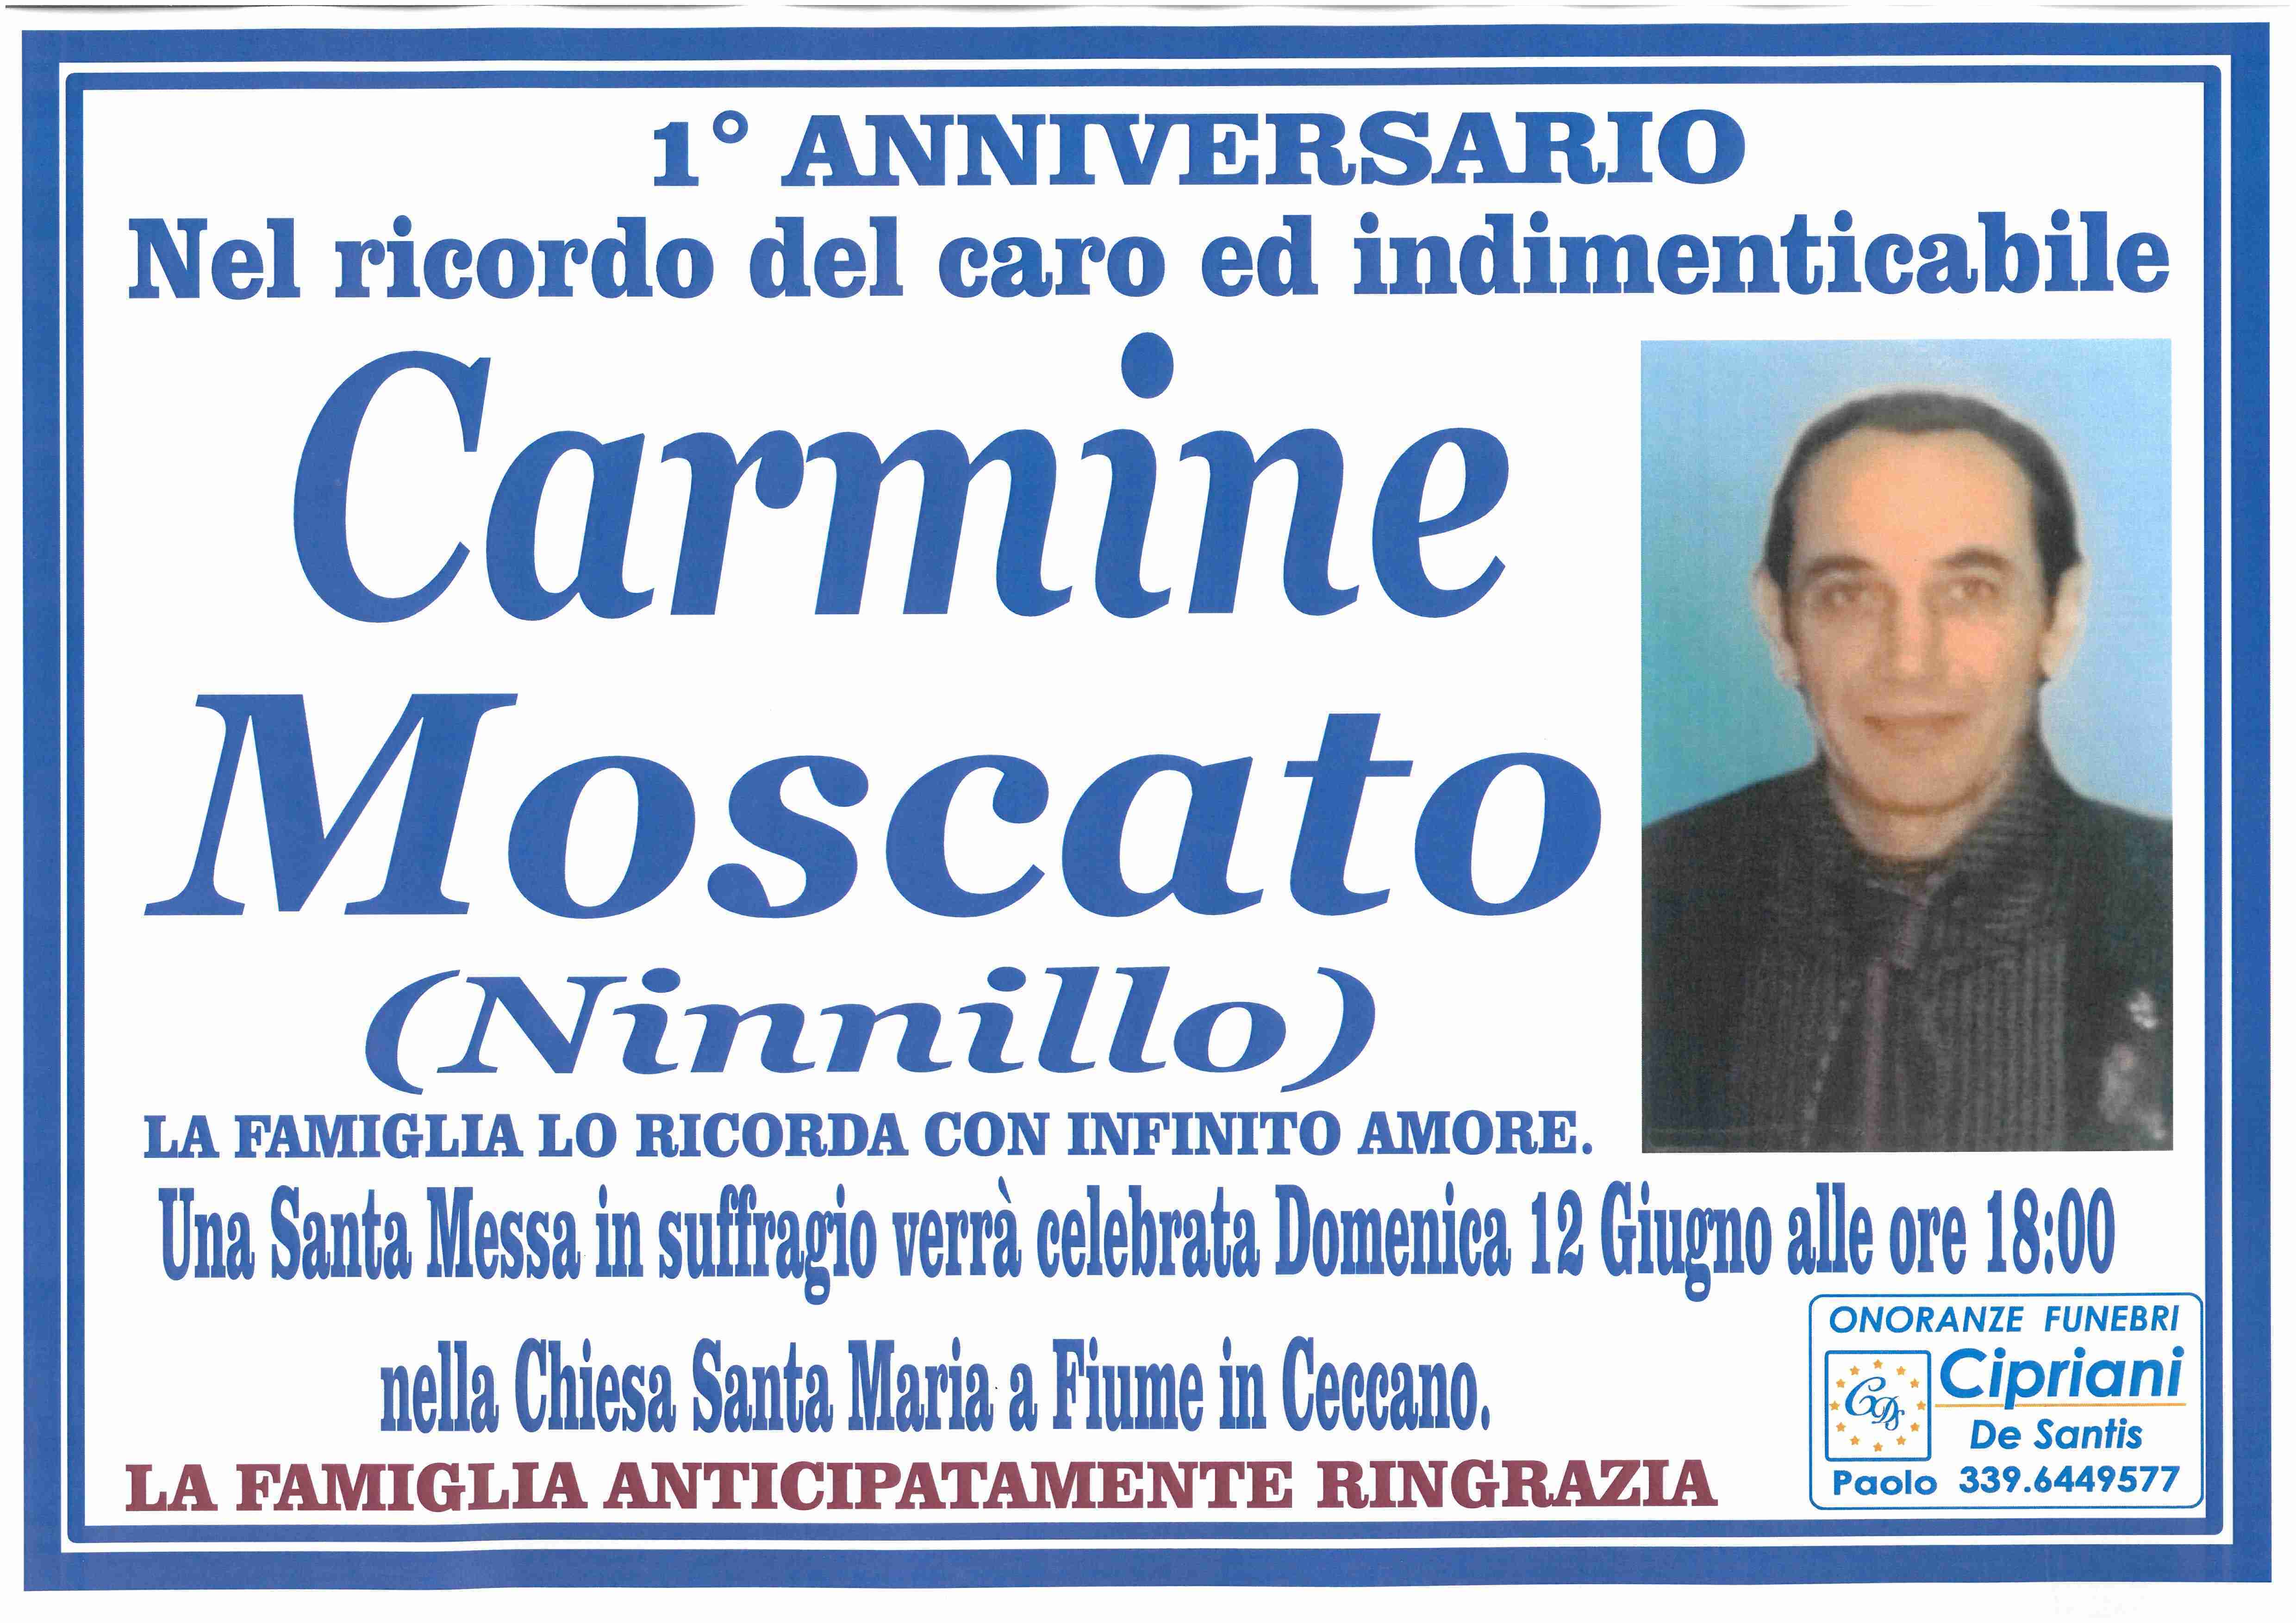 Carmine Moscato